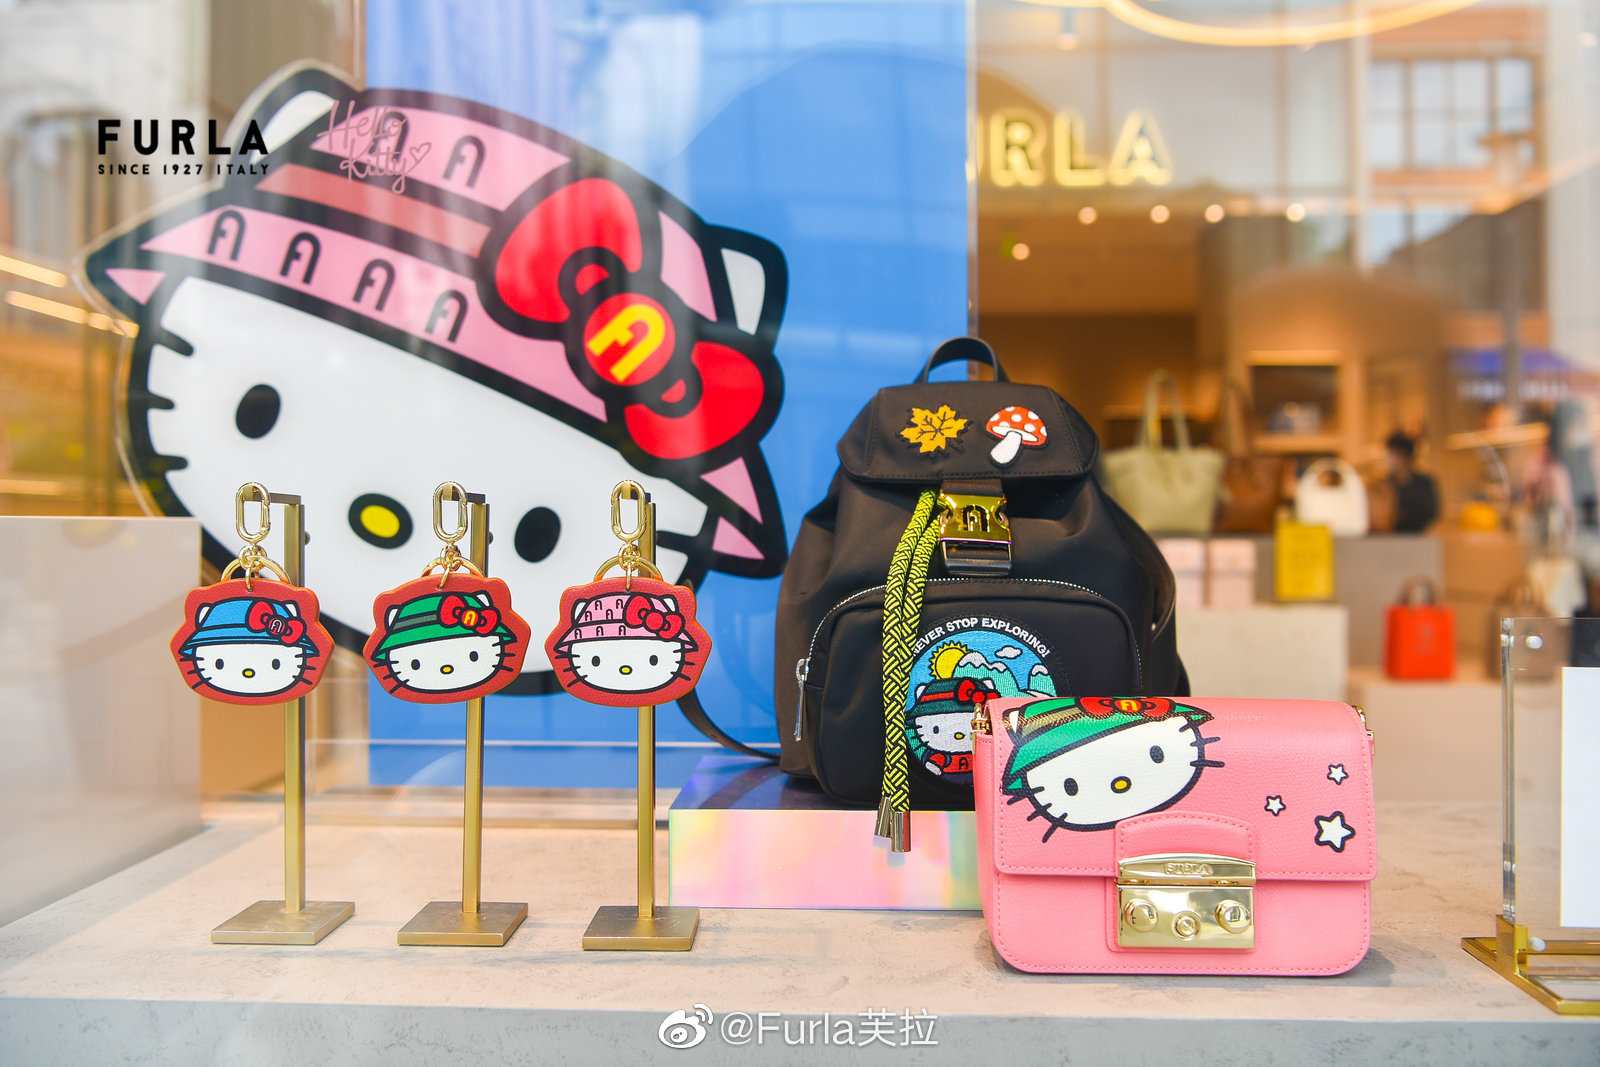 FURLA 联合三丽鸥推出「Hello Kitty 徒步」胶囊系列